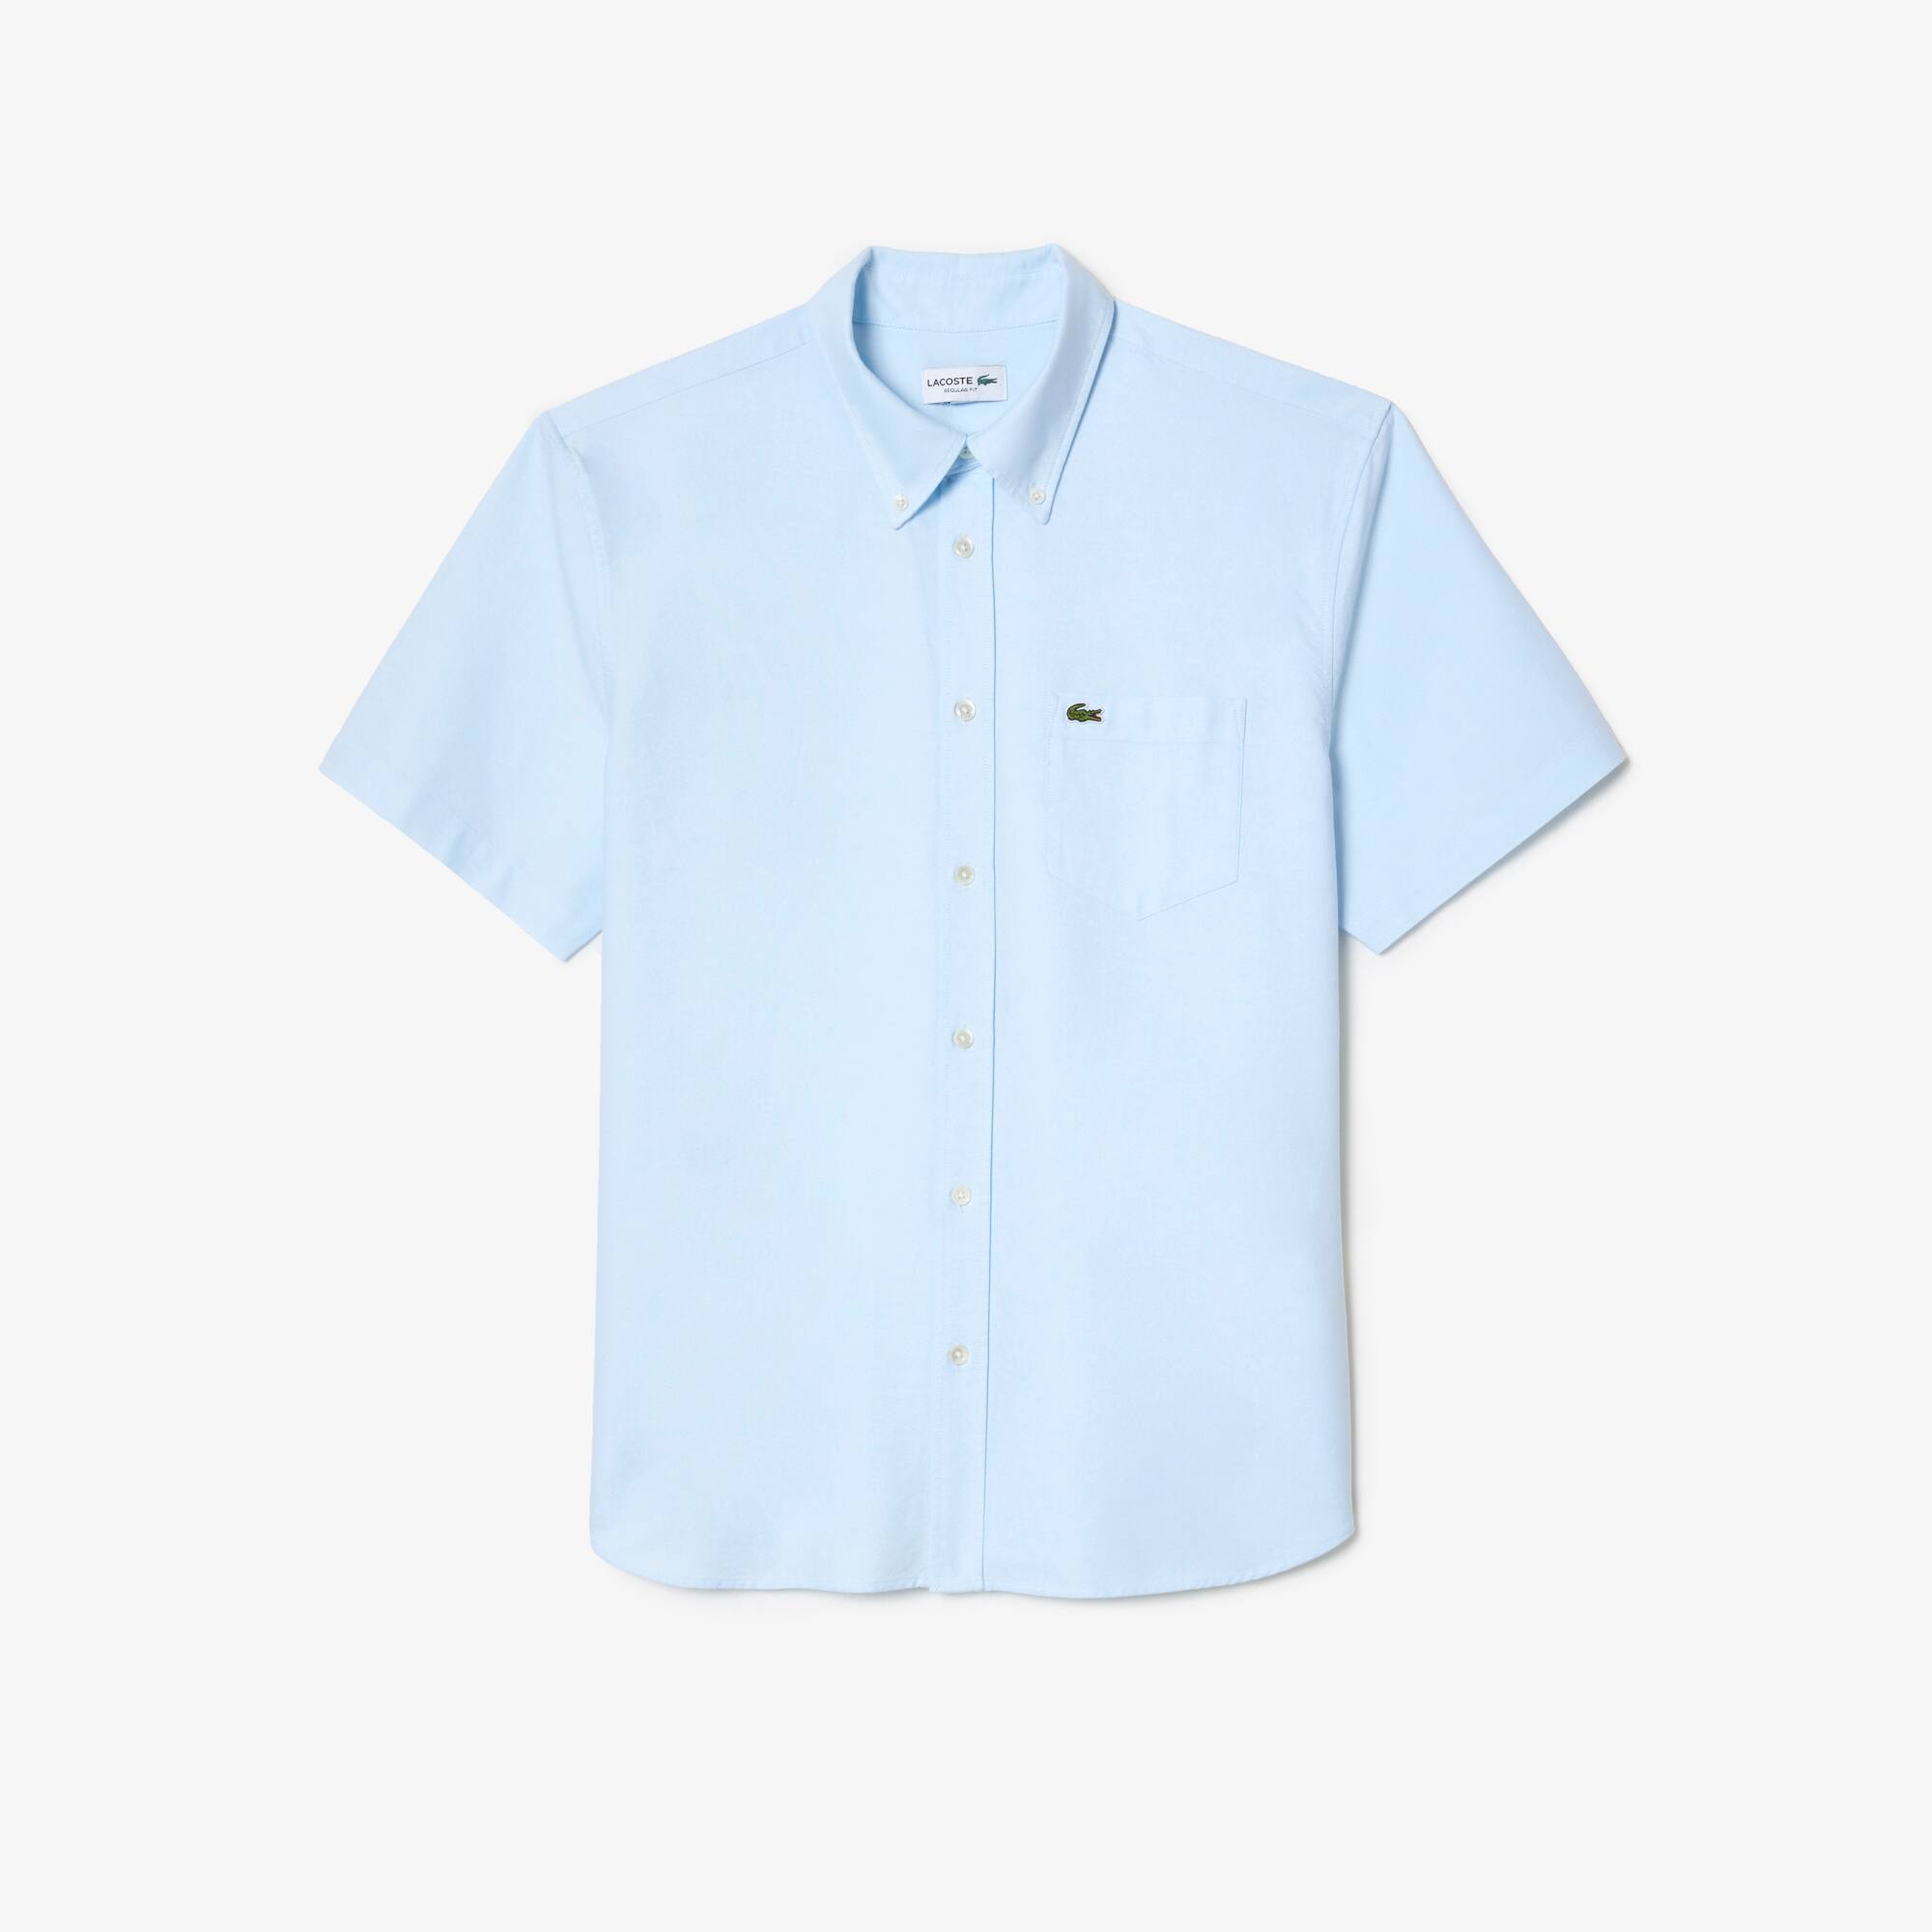 Lacoste Pale Blue Regular Fit Short Sleeve Oxford Shirt 